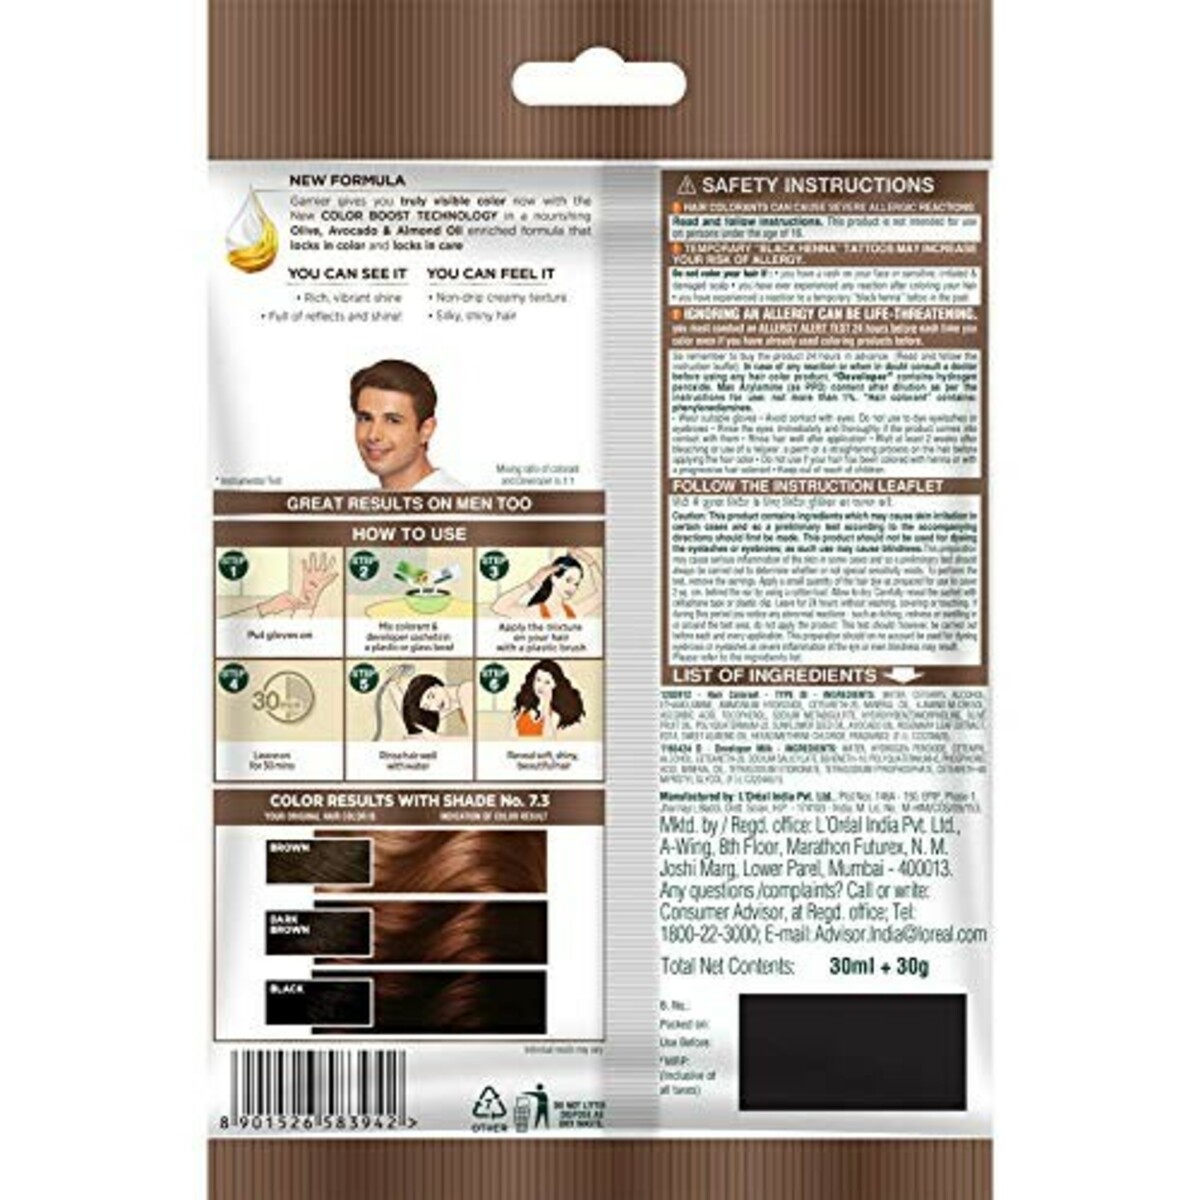 Garnier  Hair Color  Cream Naturals Golden Brown Sachet Shade 7.3